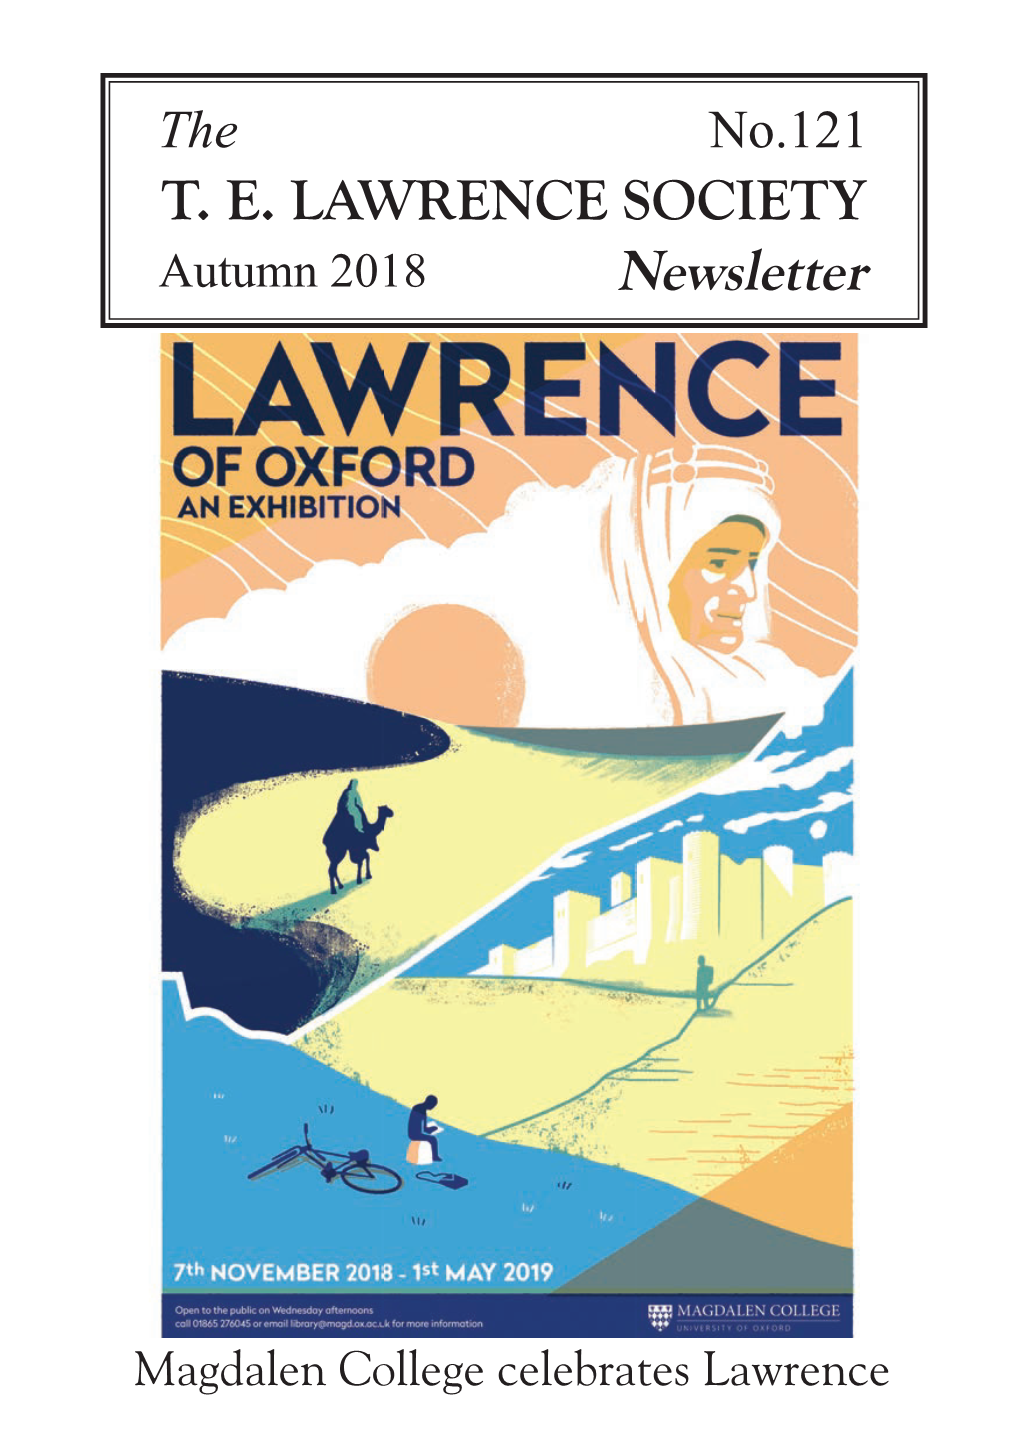 T. E. LAWRENCE SOCIETY Newsletter